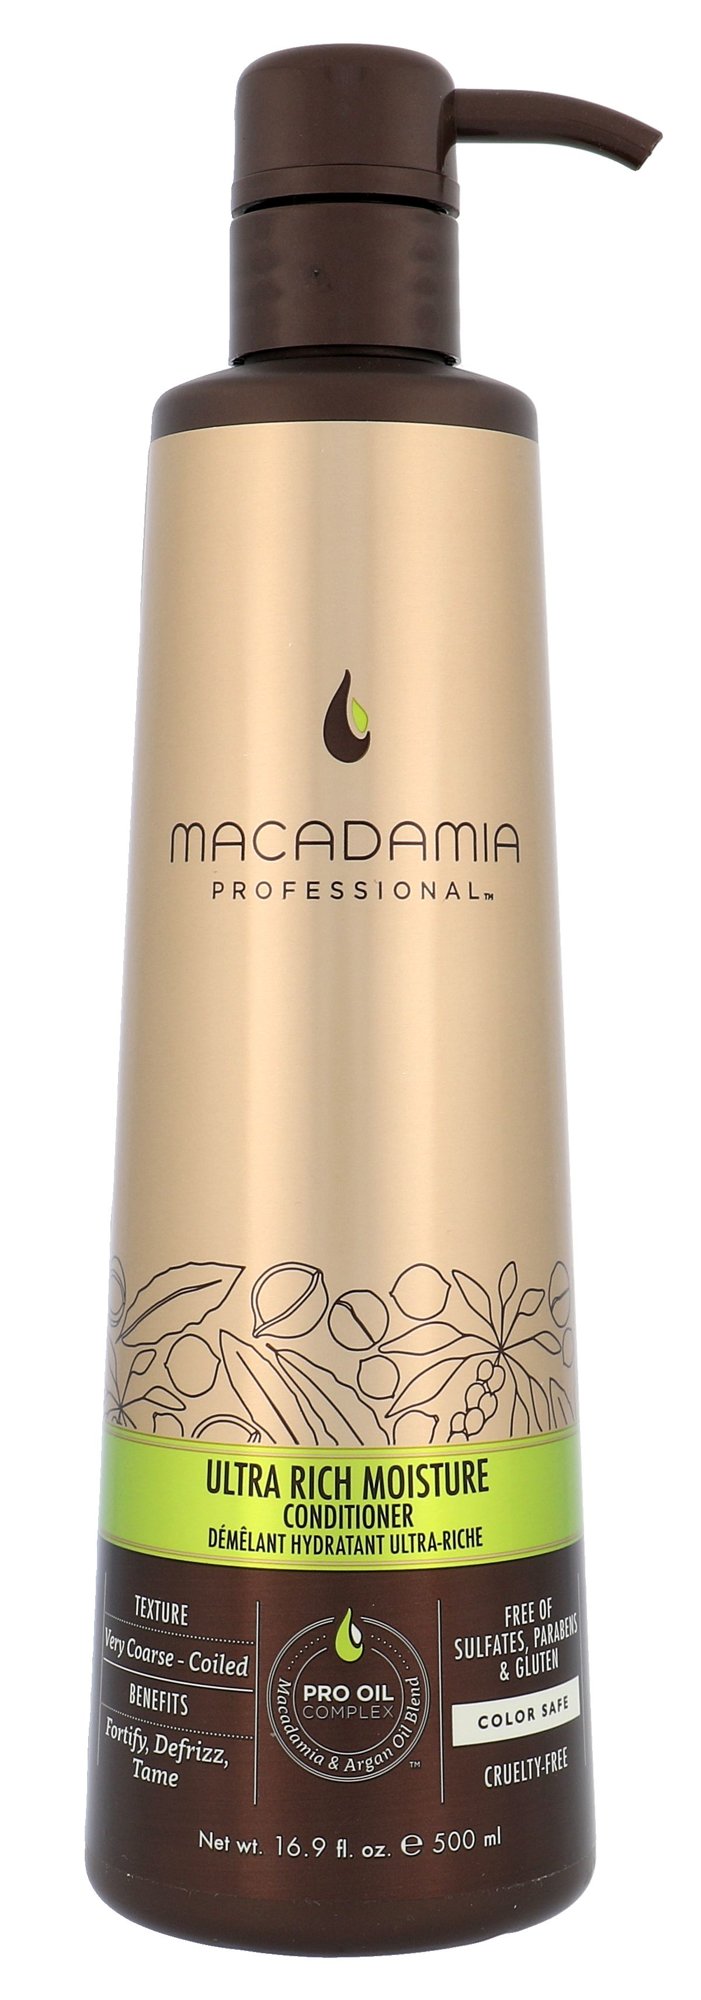 Macadamia Professional Ultra Rich Moisture 500ml kondicionierius